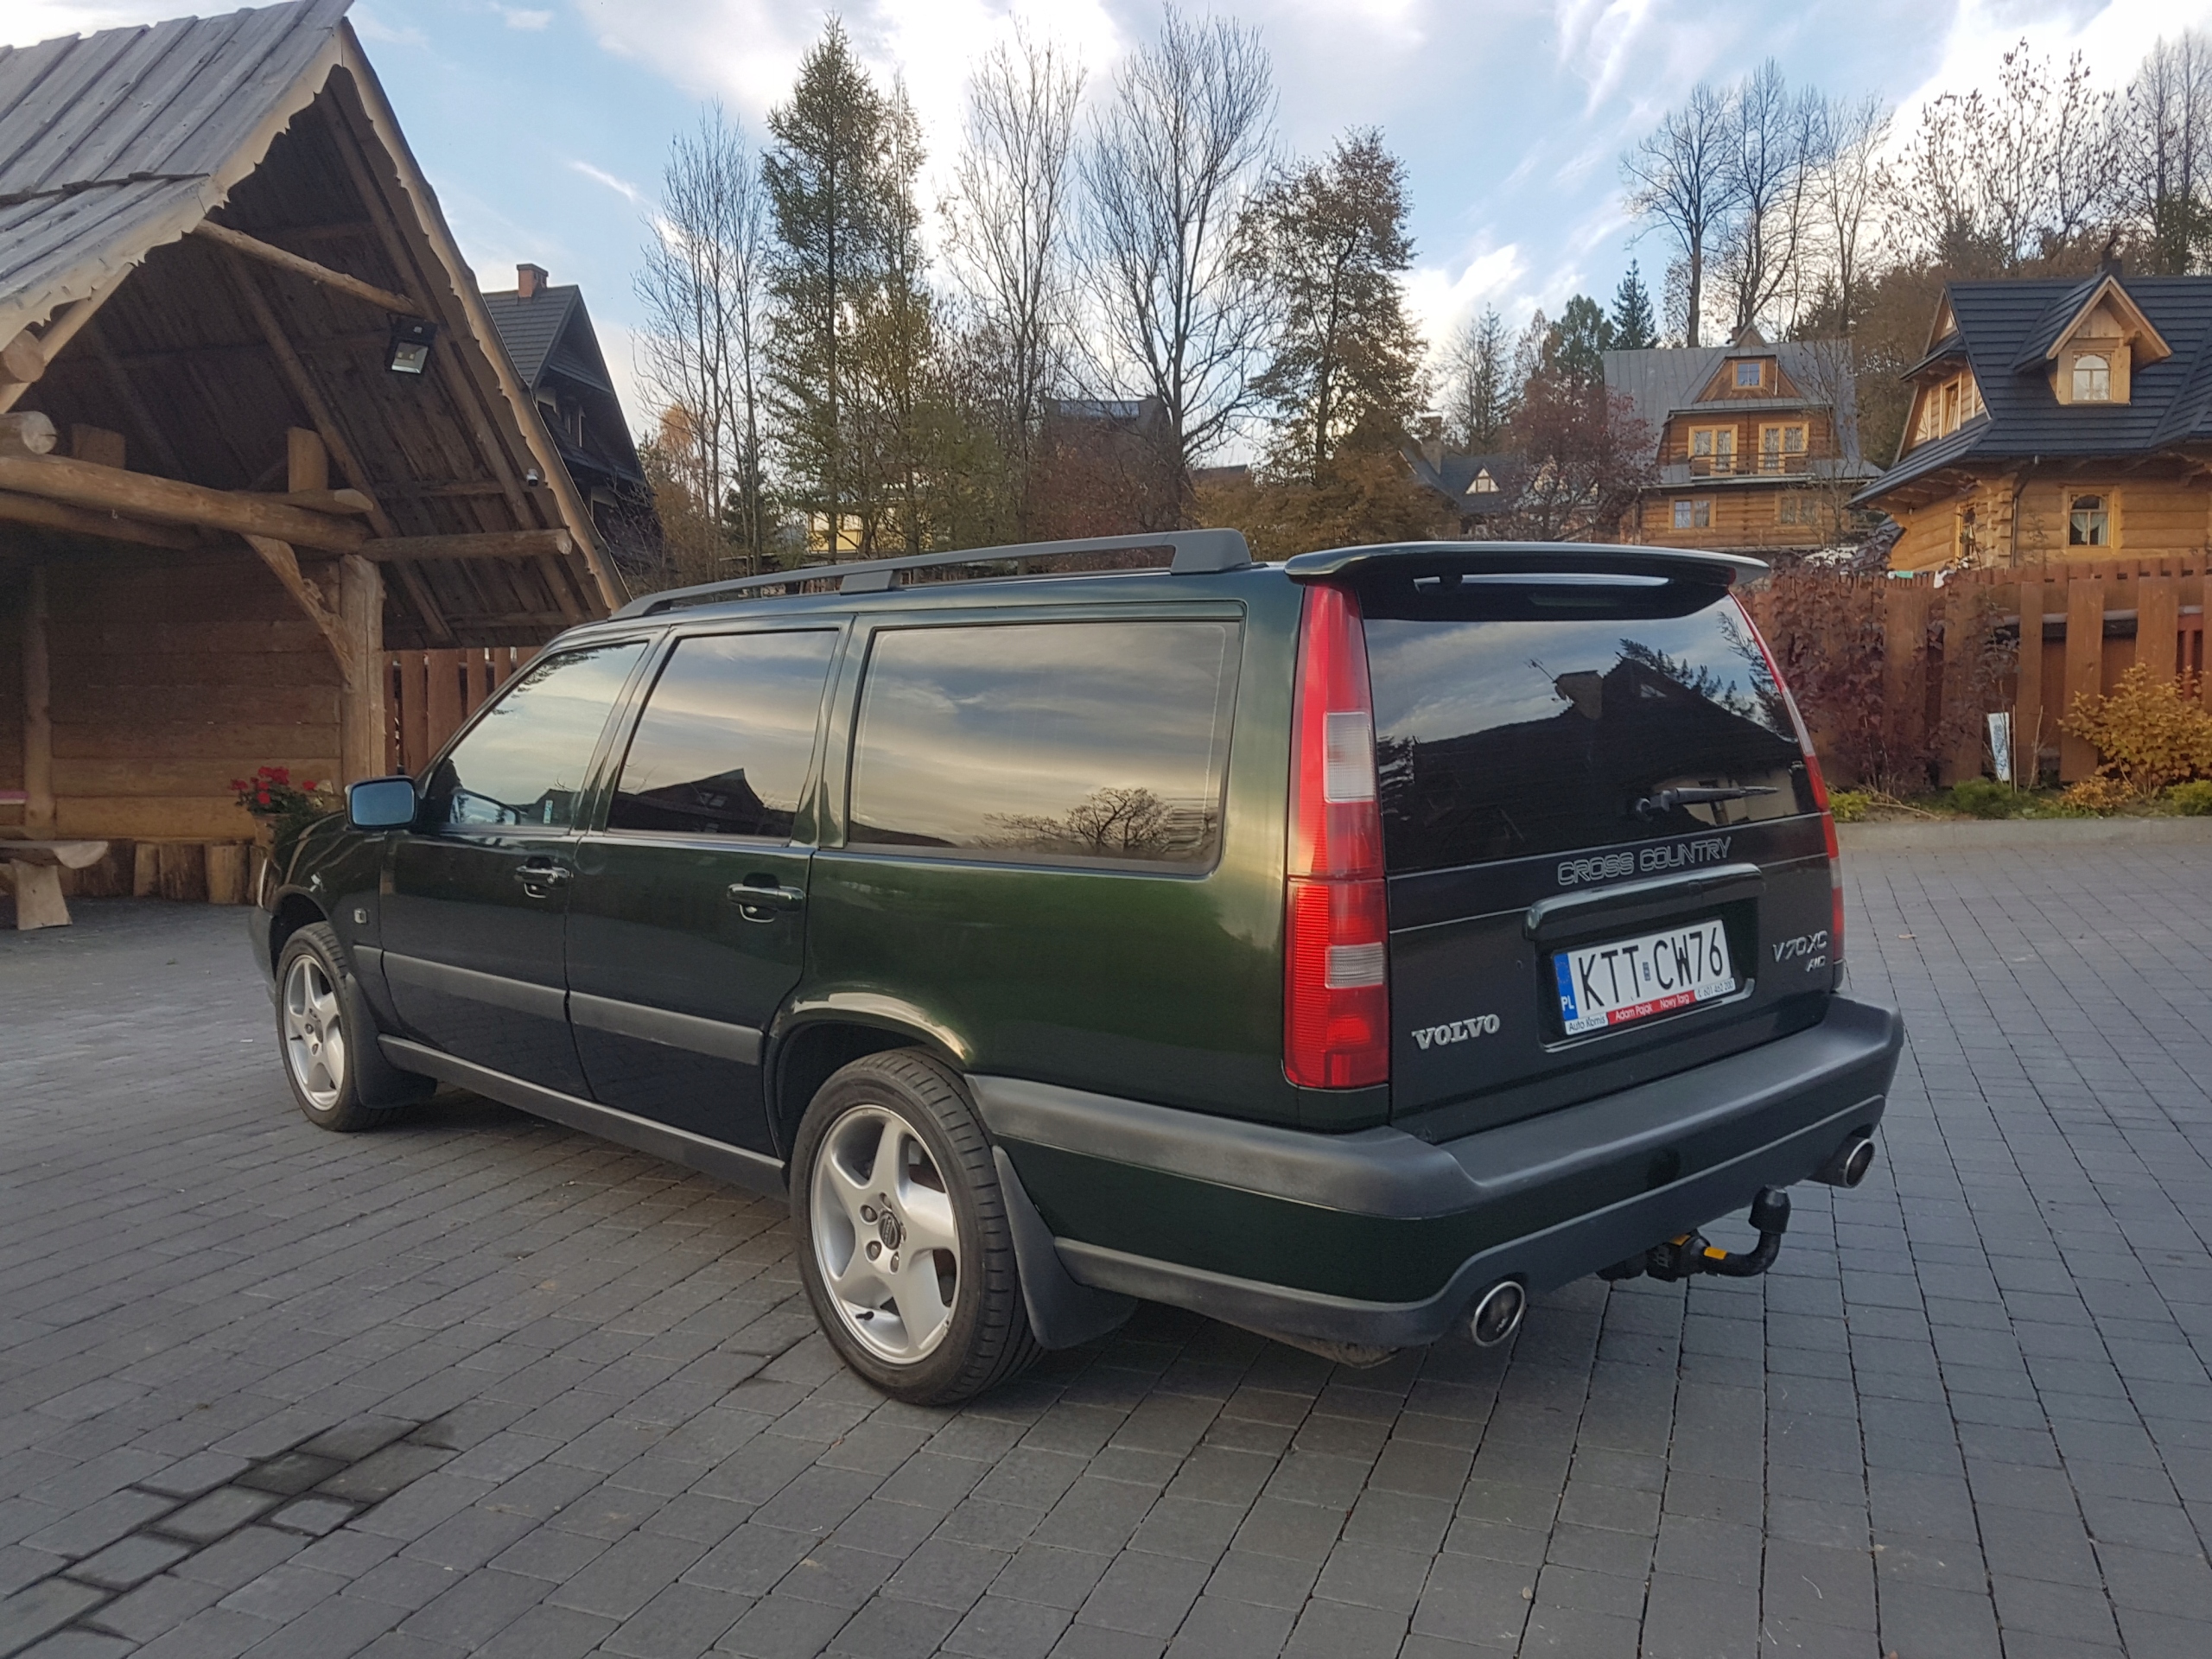 Volvo V70 XC CROSS COUNTRY 99r, 4x4 AWD szwecja